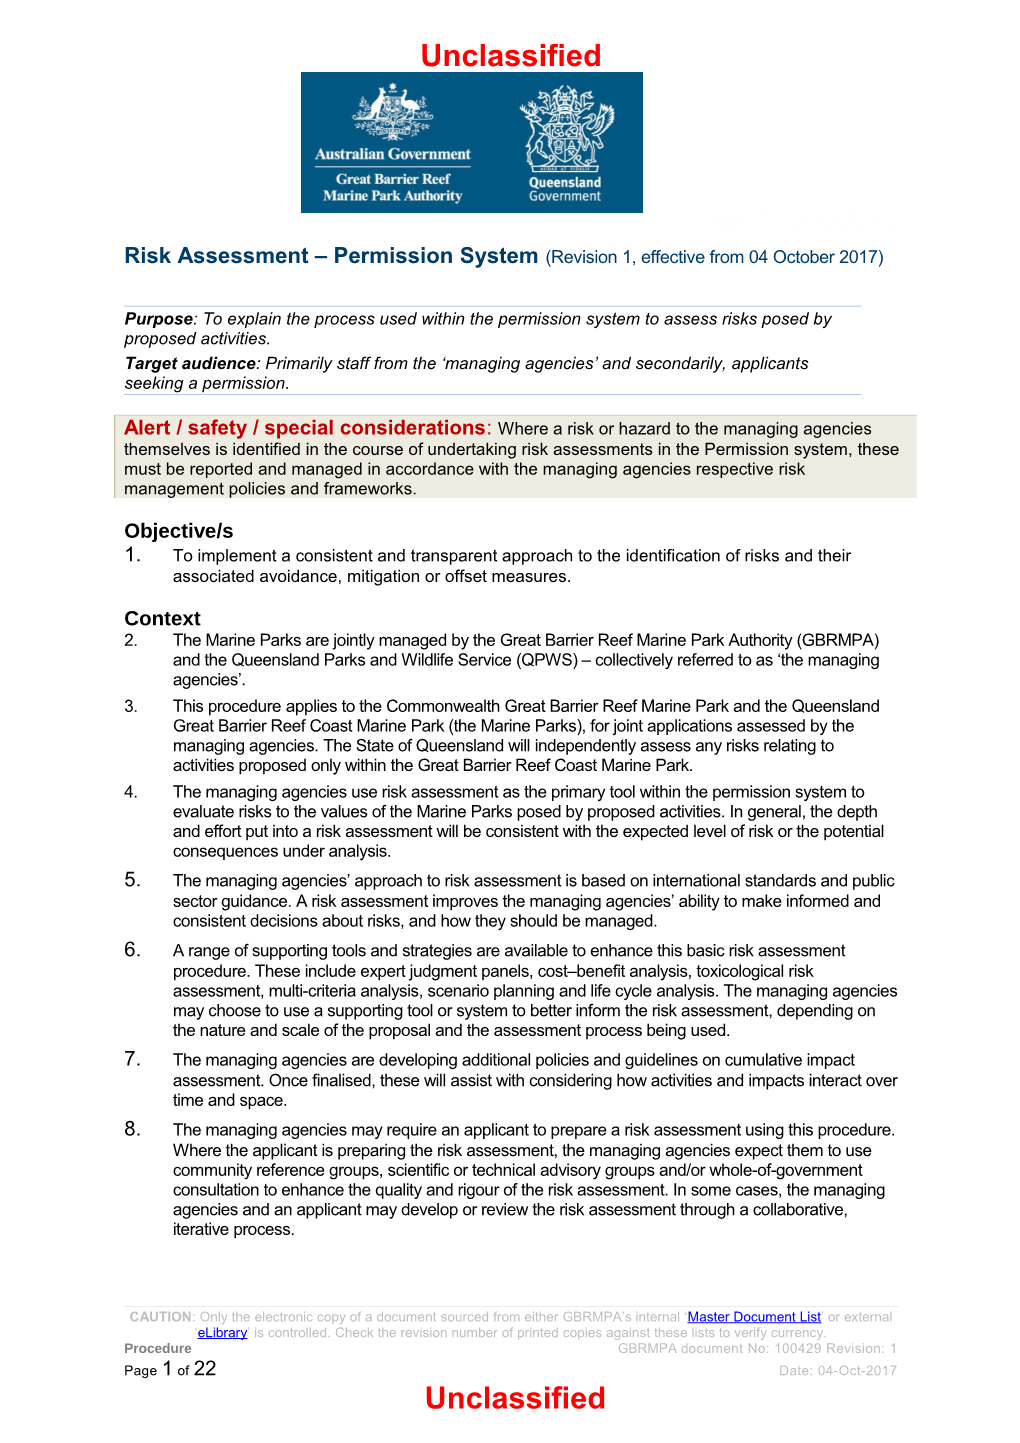 Risk Assessment - Permission System